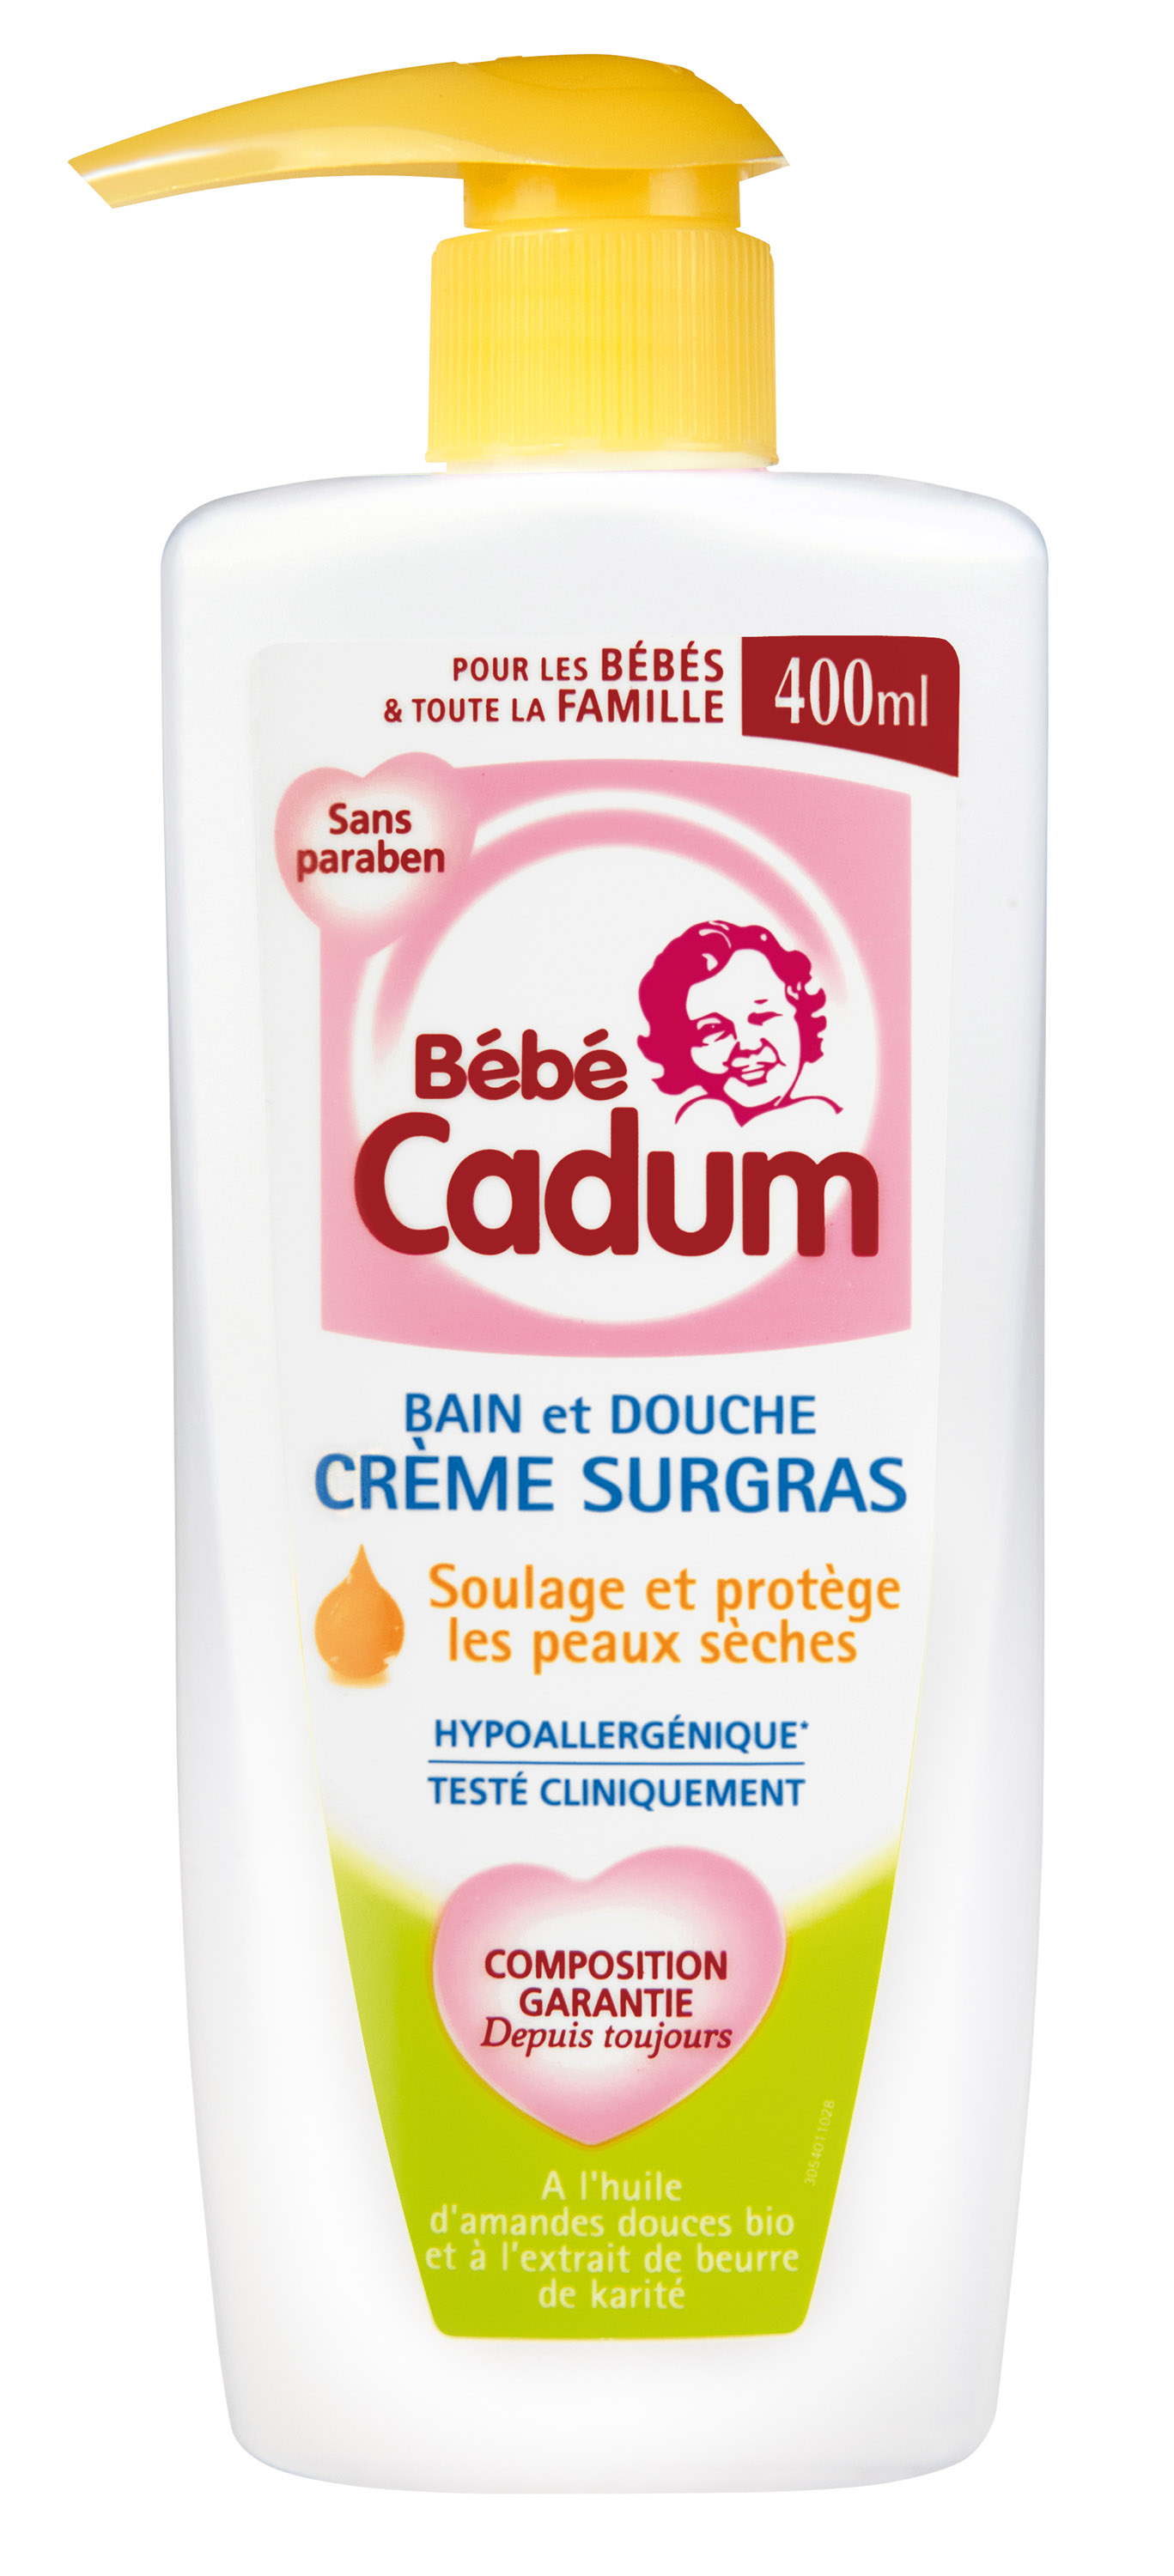 Bébé Cadum” French Soap Advertising Poster w/ Slick Red Frame - 30